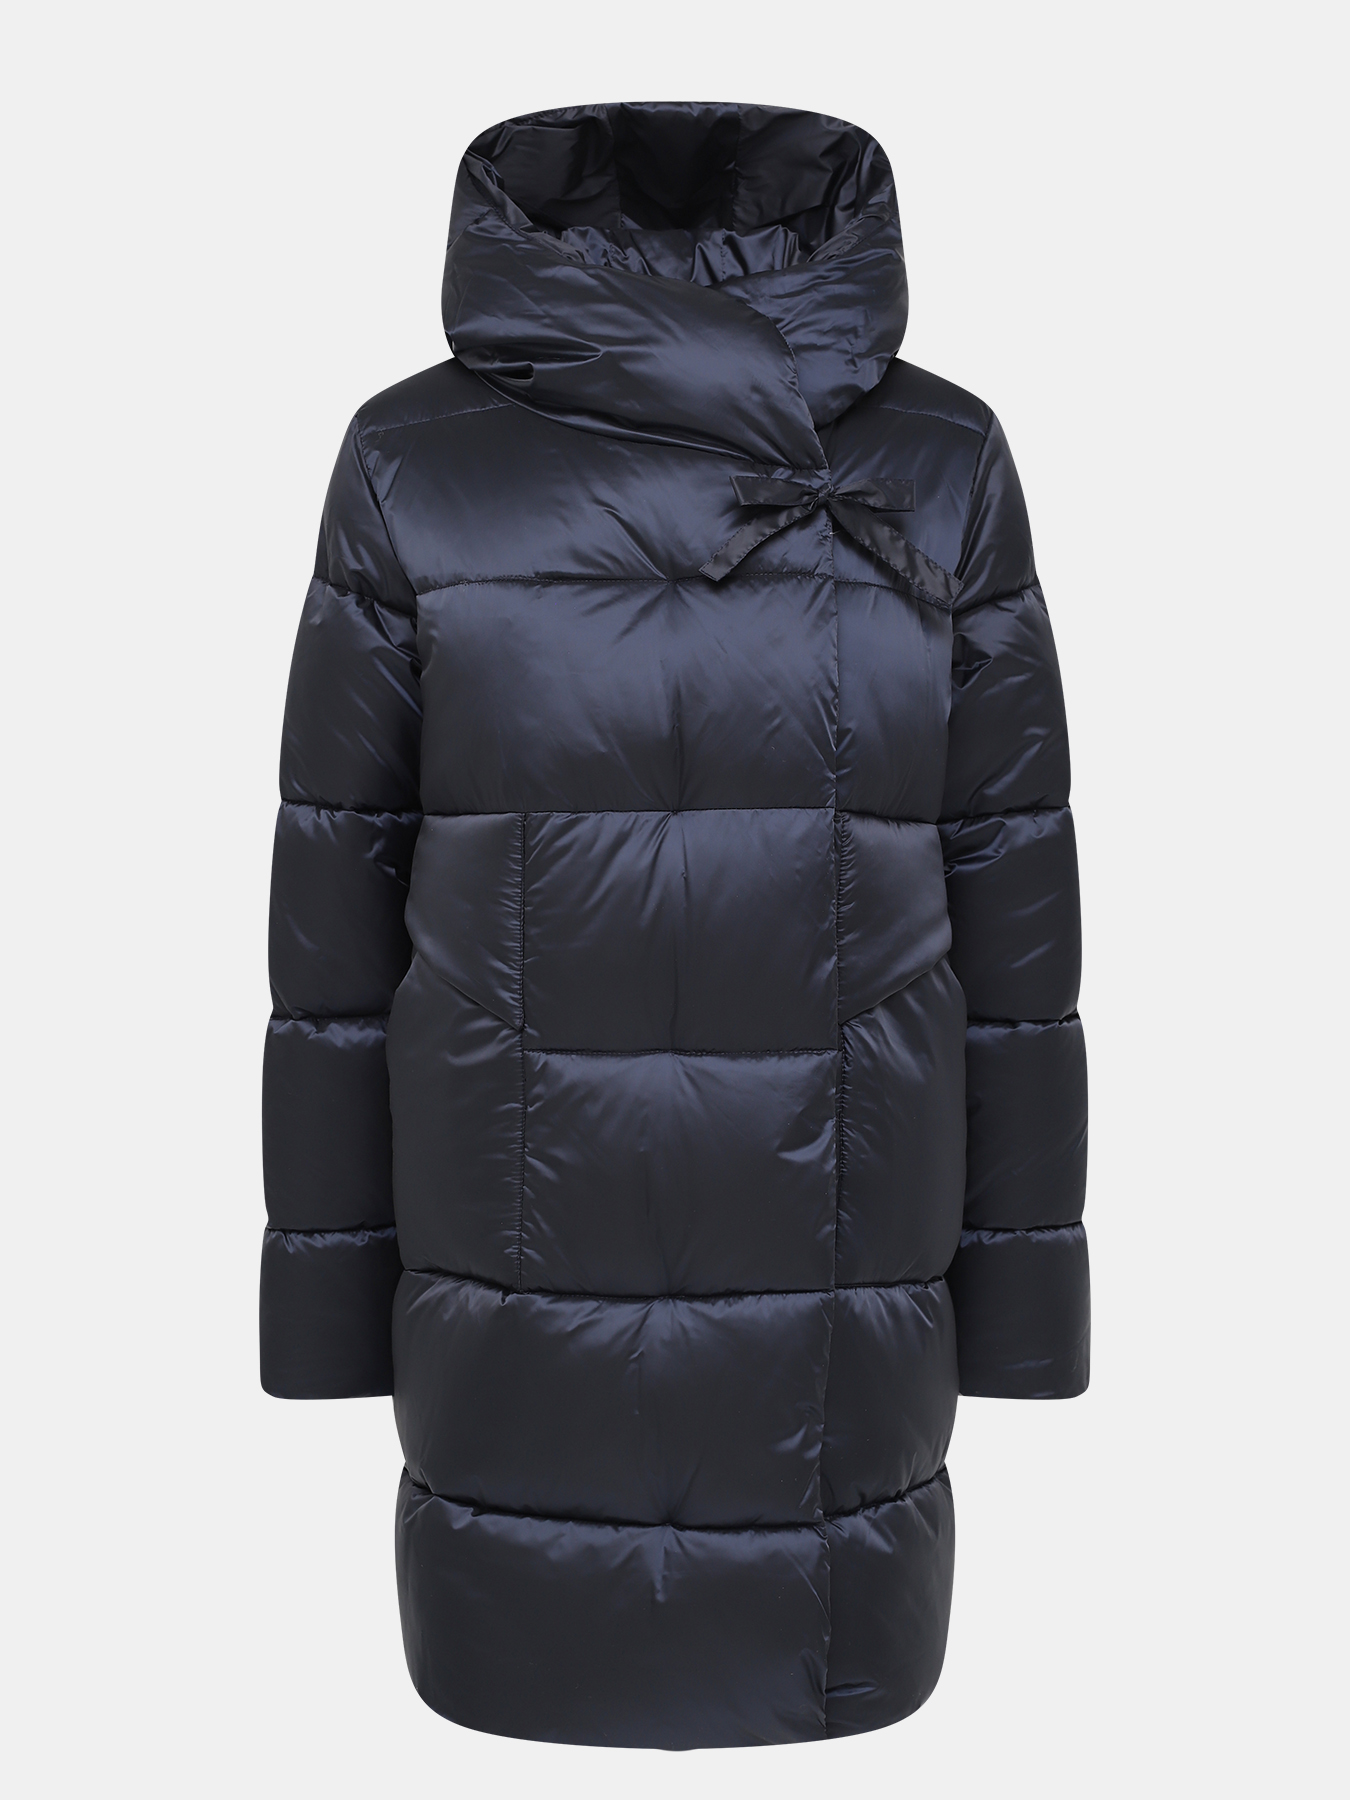 Пальто зимнее Maritta 433530-020, цвет темно-синий, размер 44